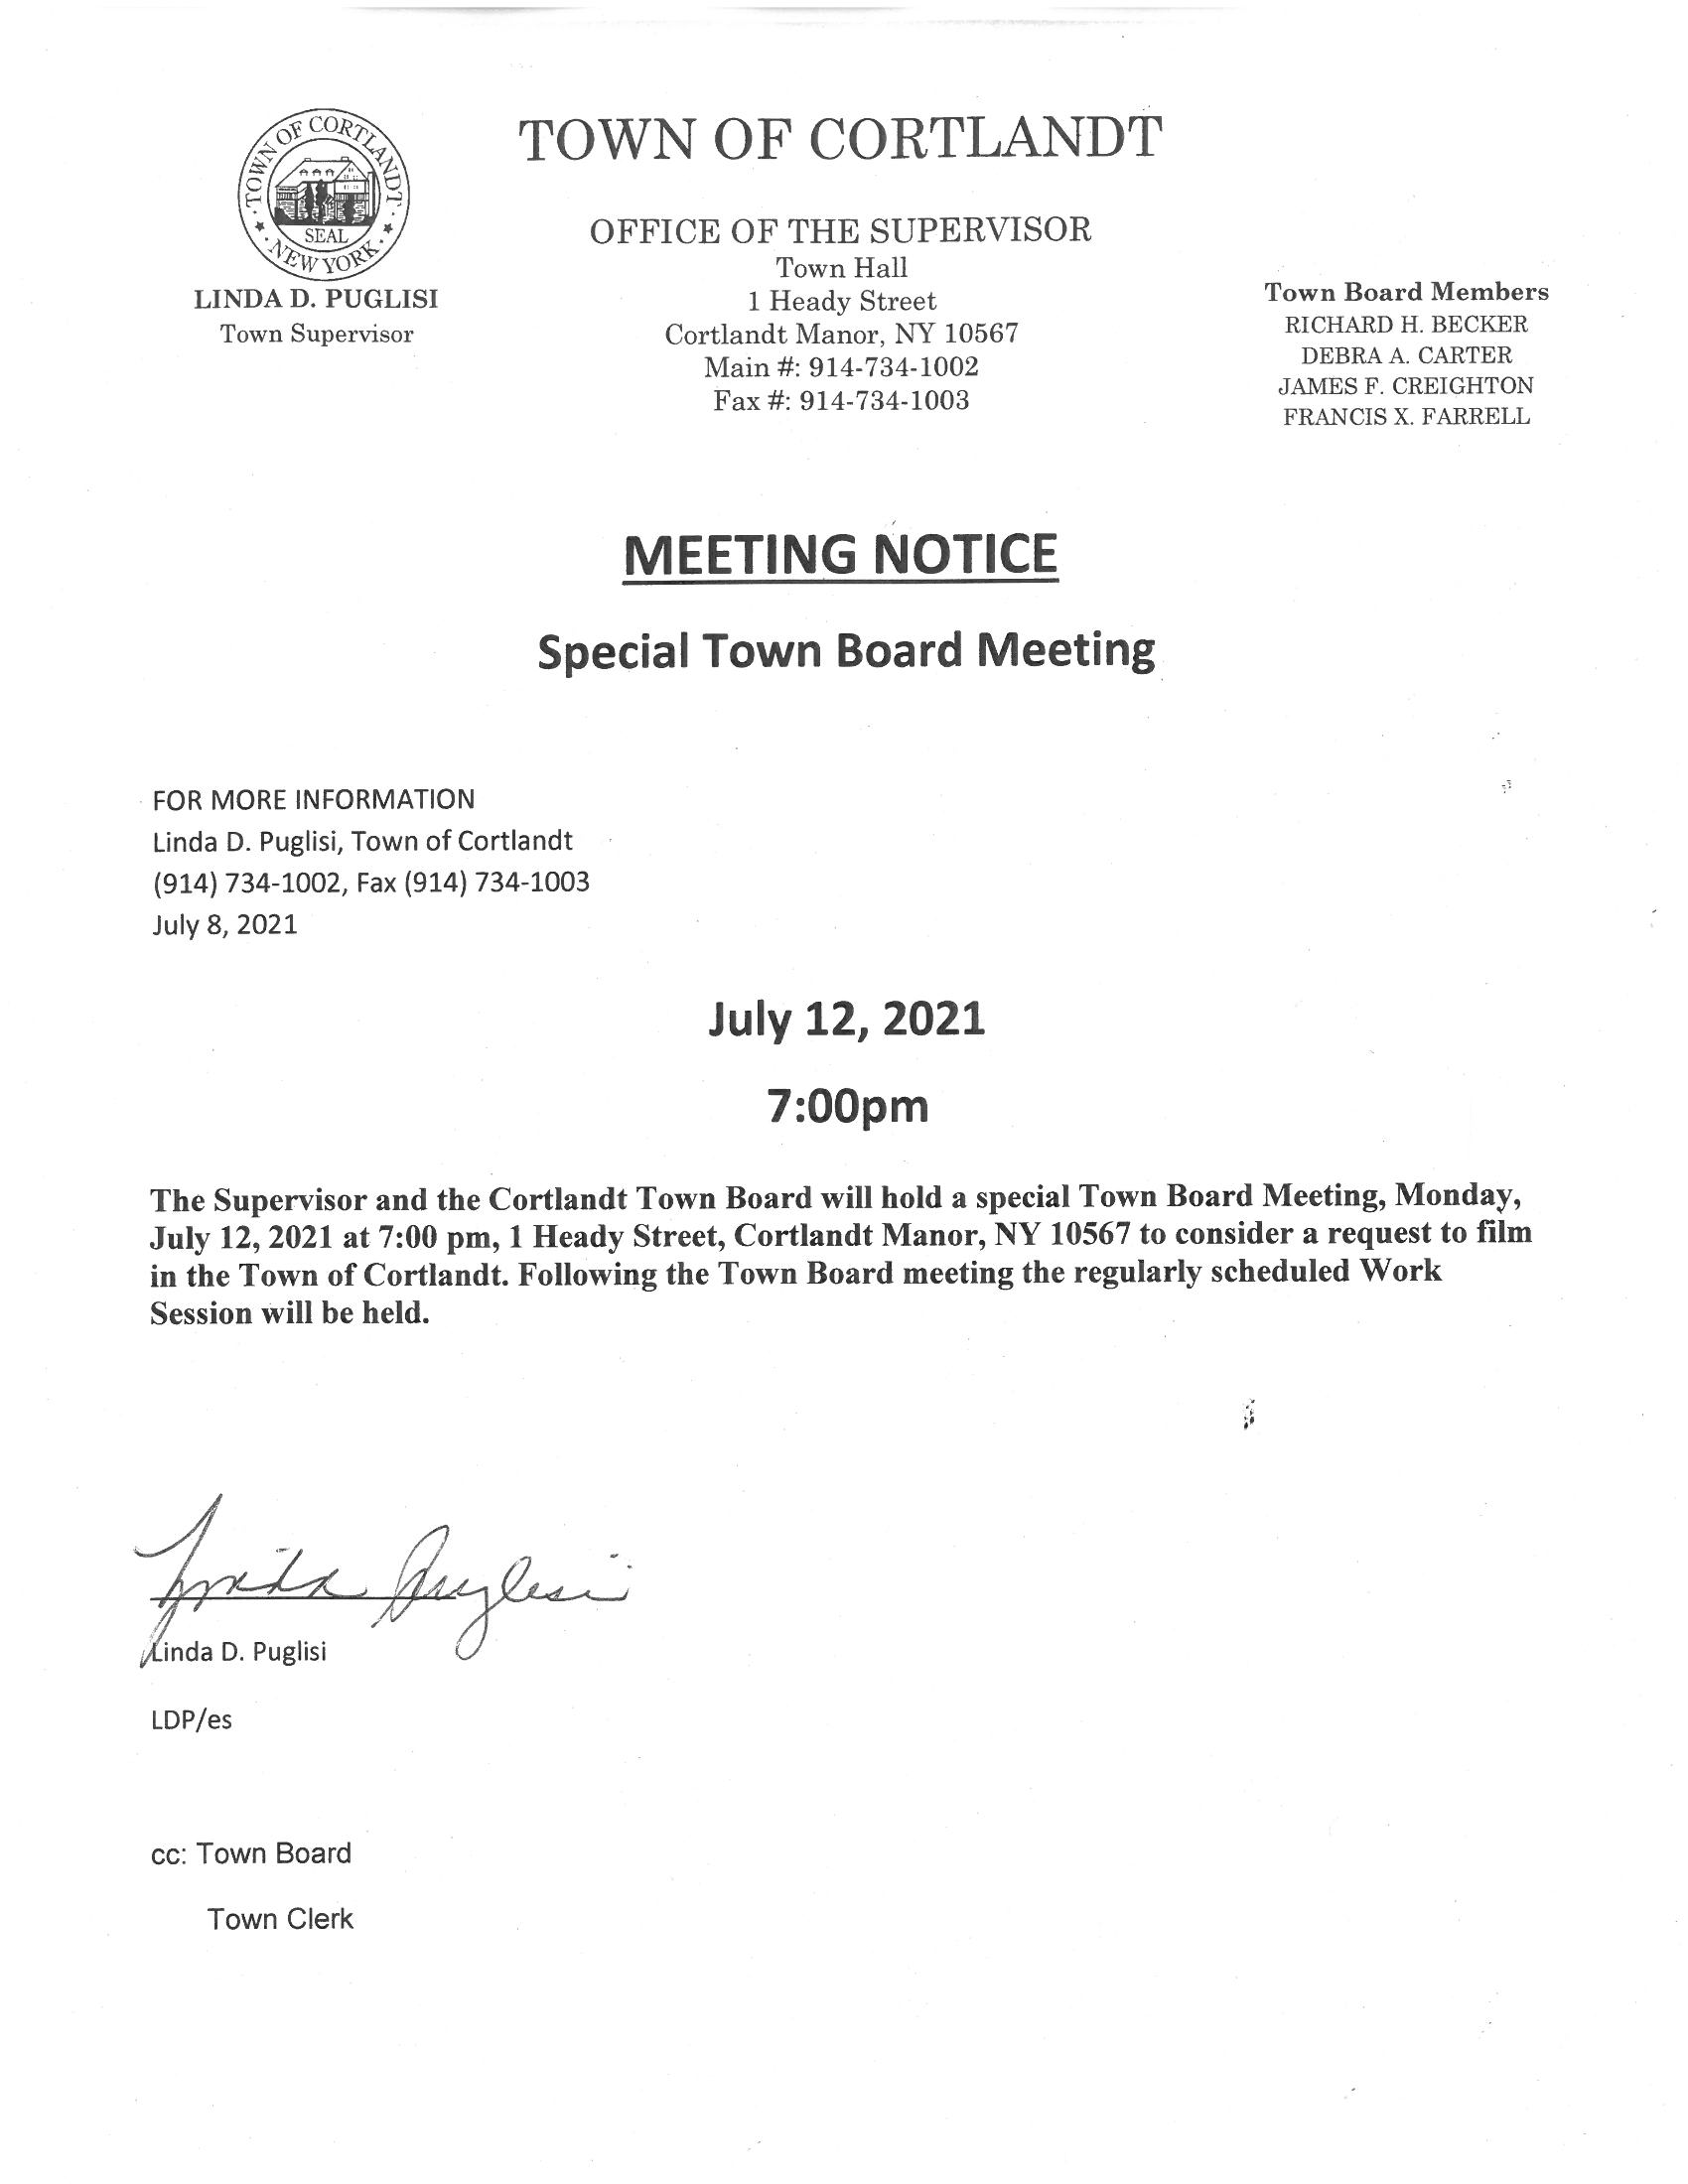 Special Town Board Meeting Notice 7.12.21.jpg